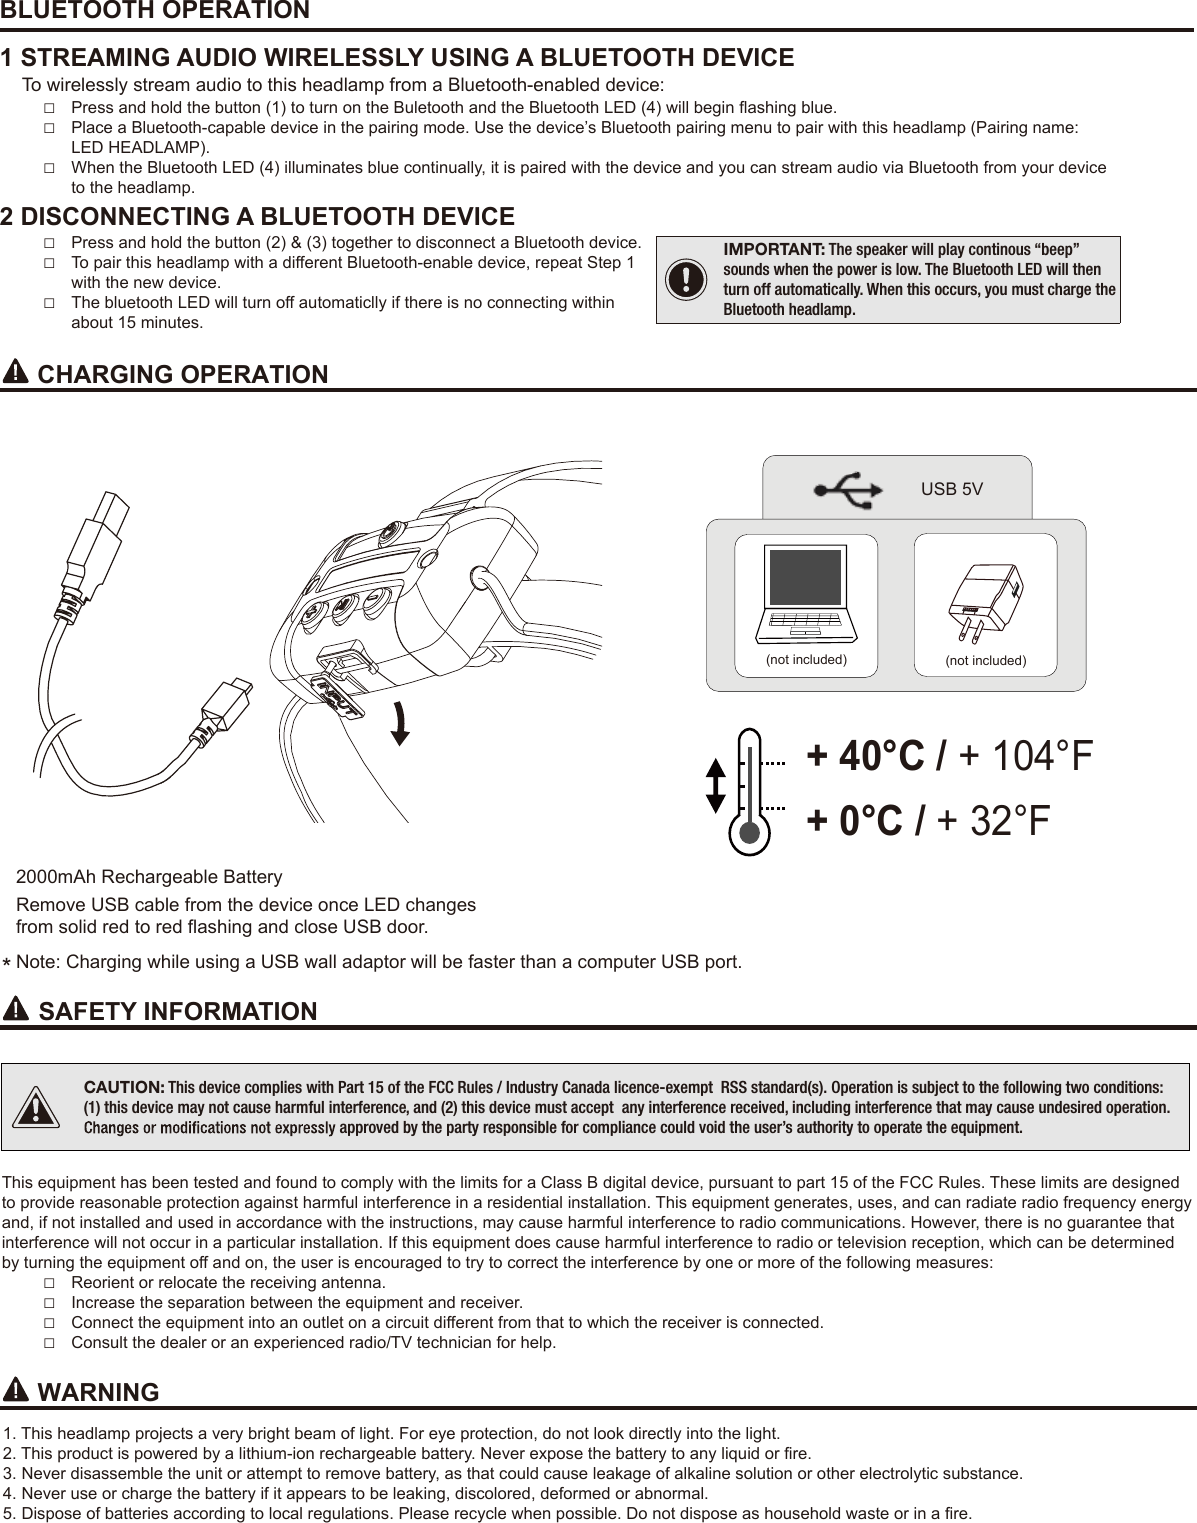 Grde Headlamp Rechargeable User Manual Pdf